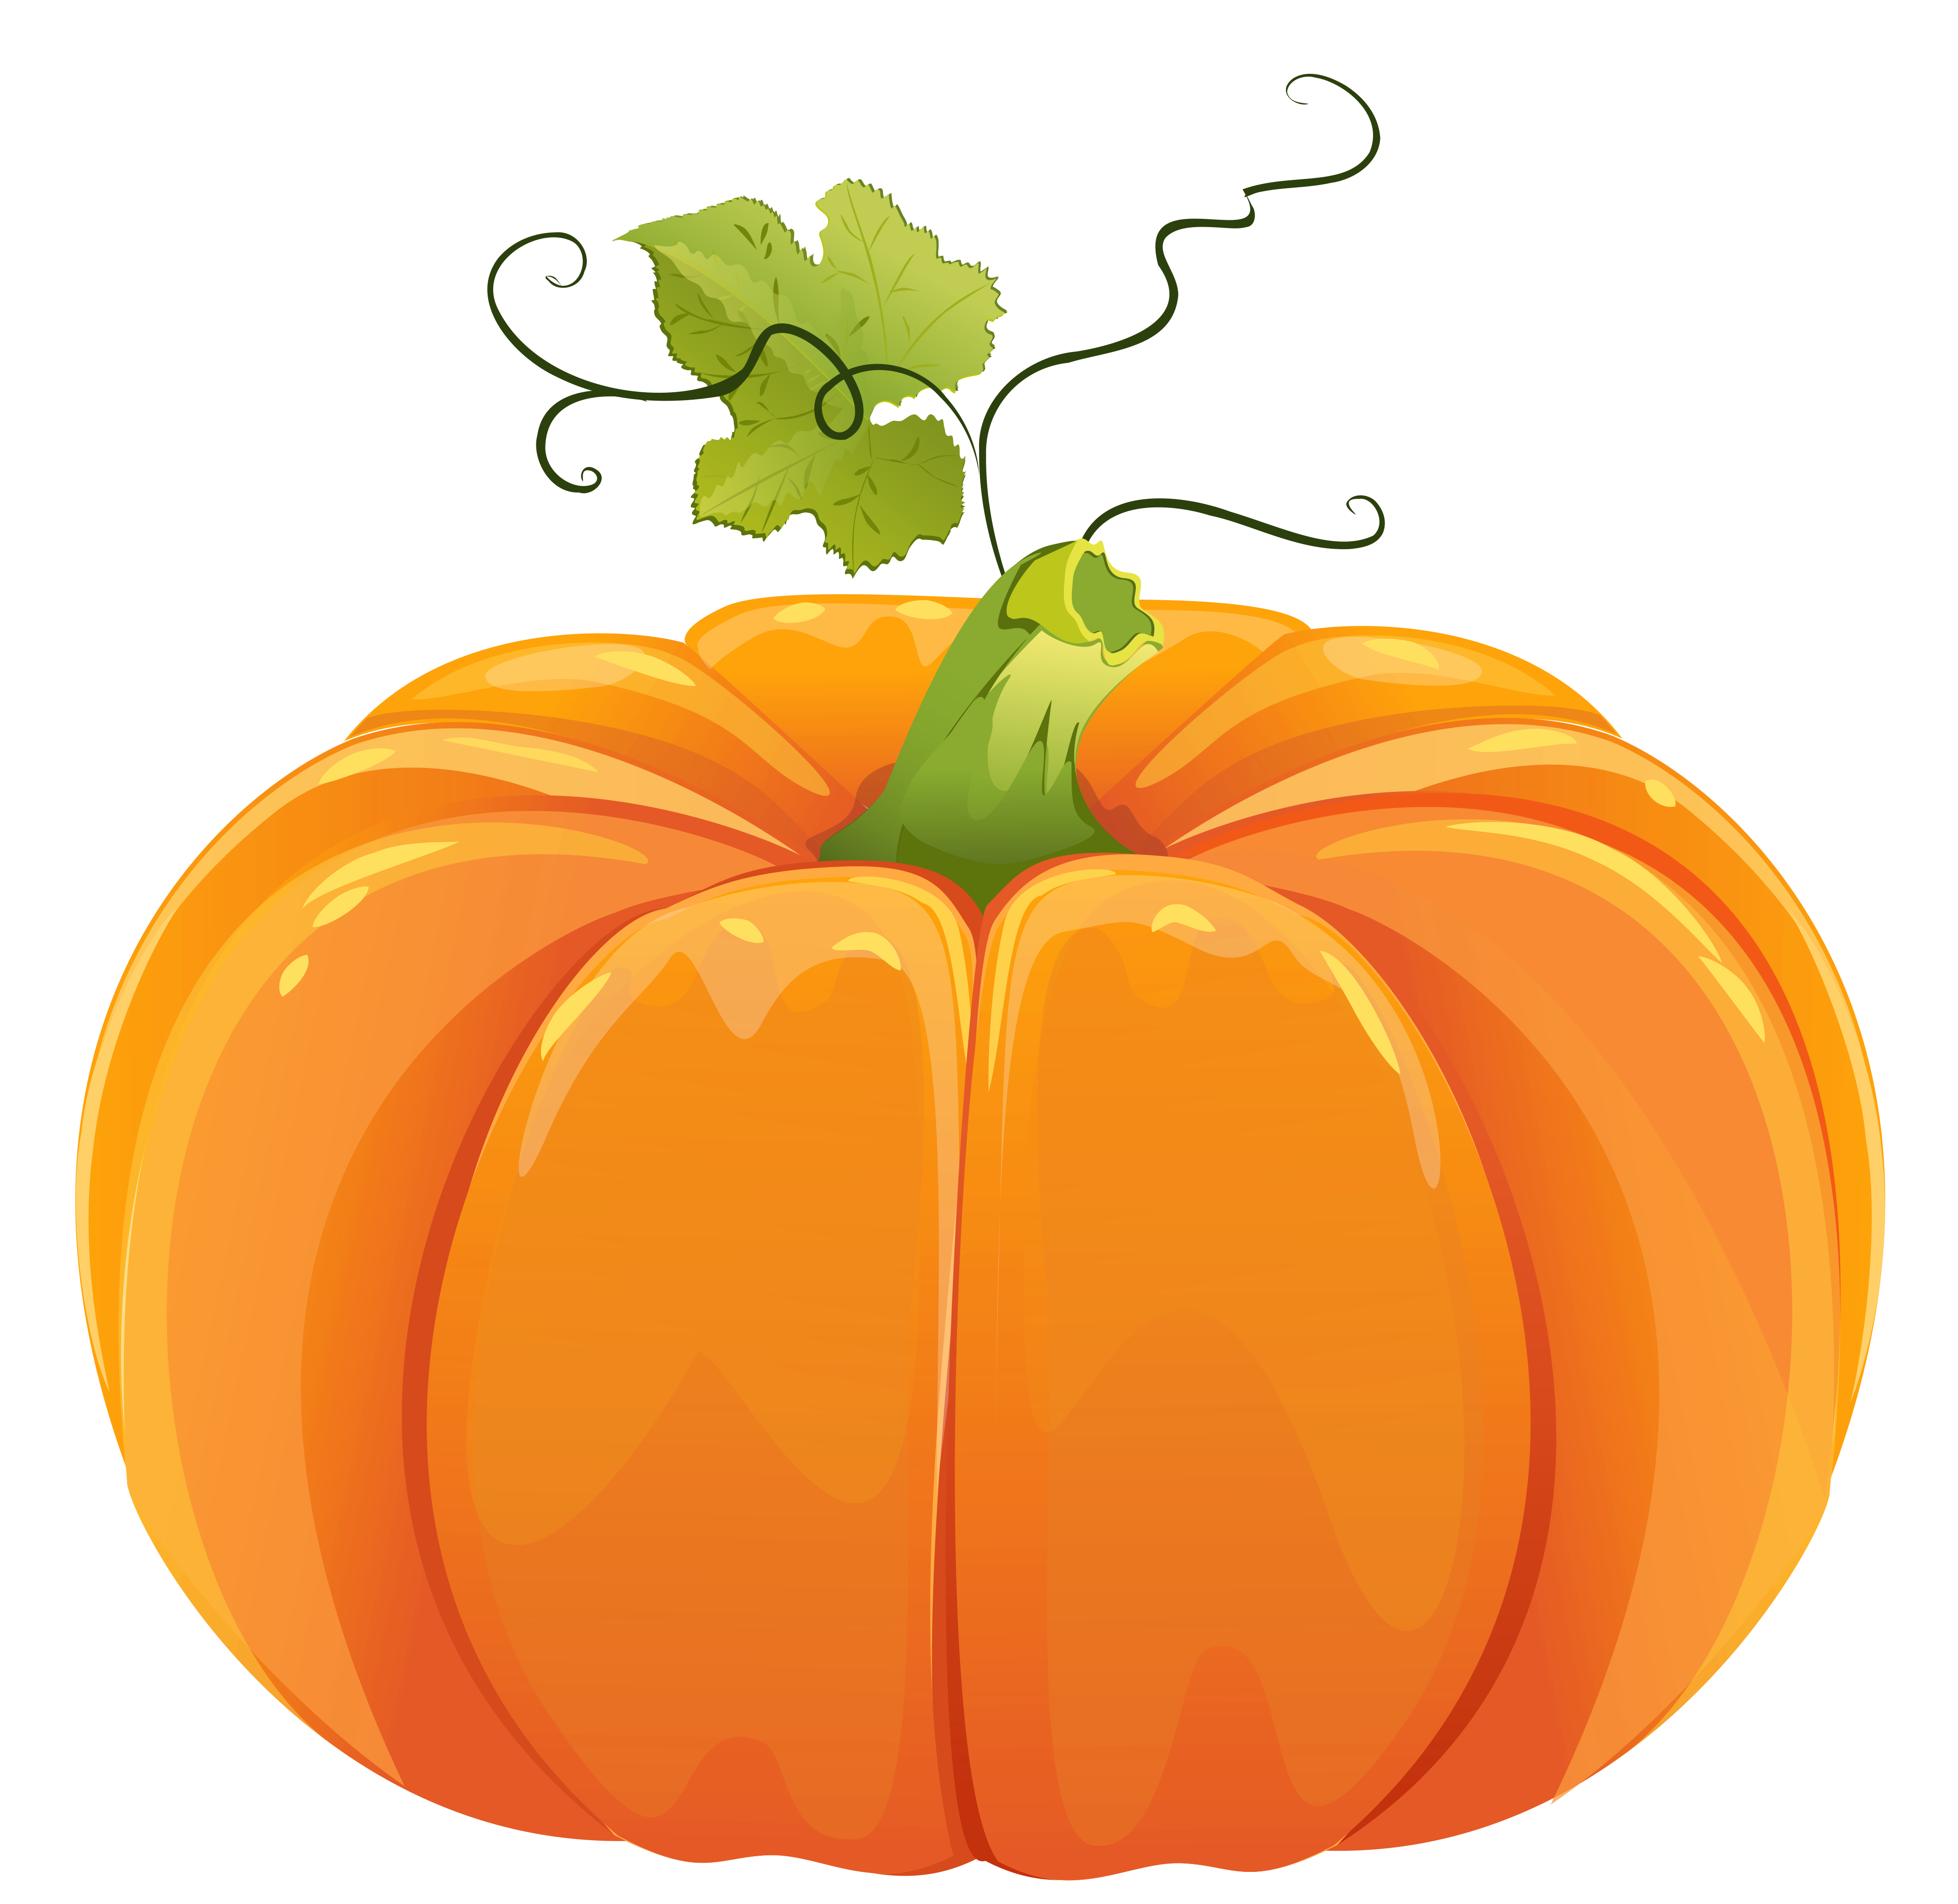 Pumpkins turkey and pumpkin c